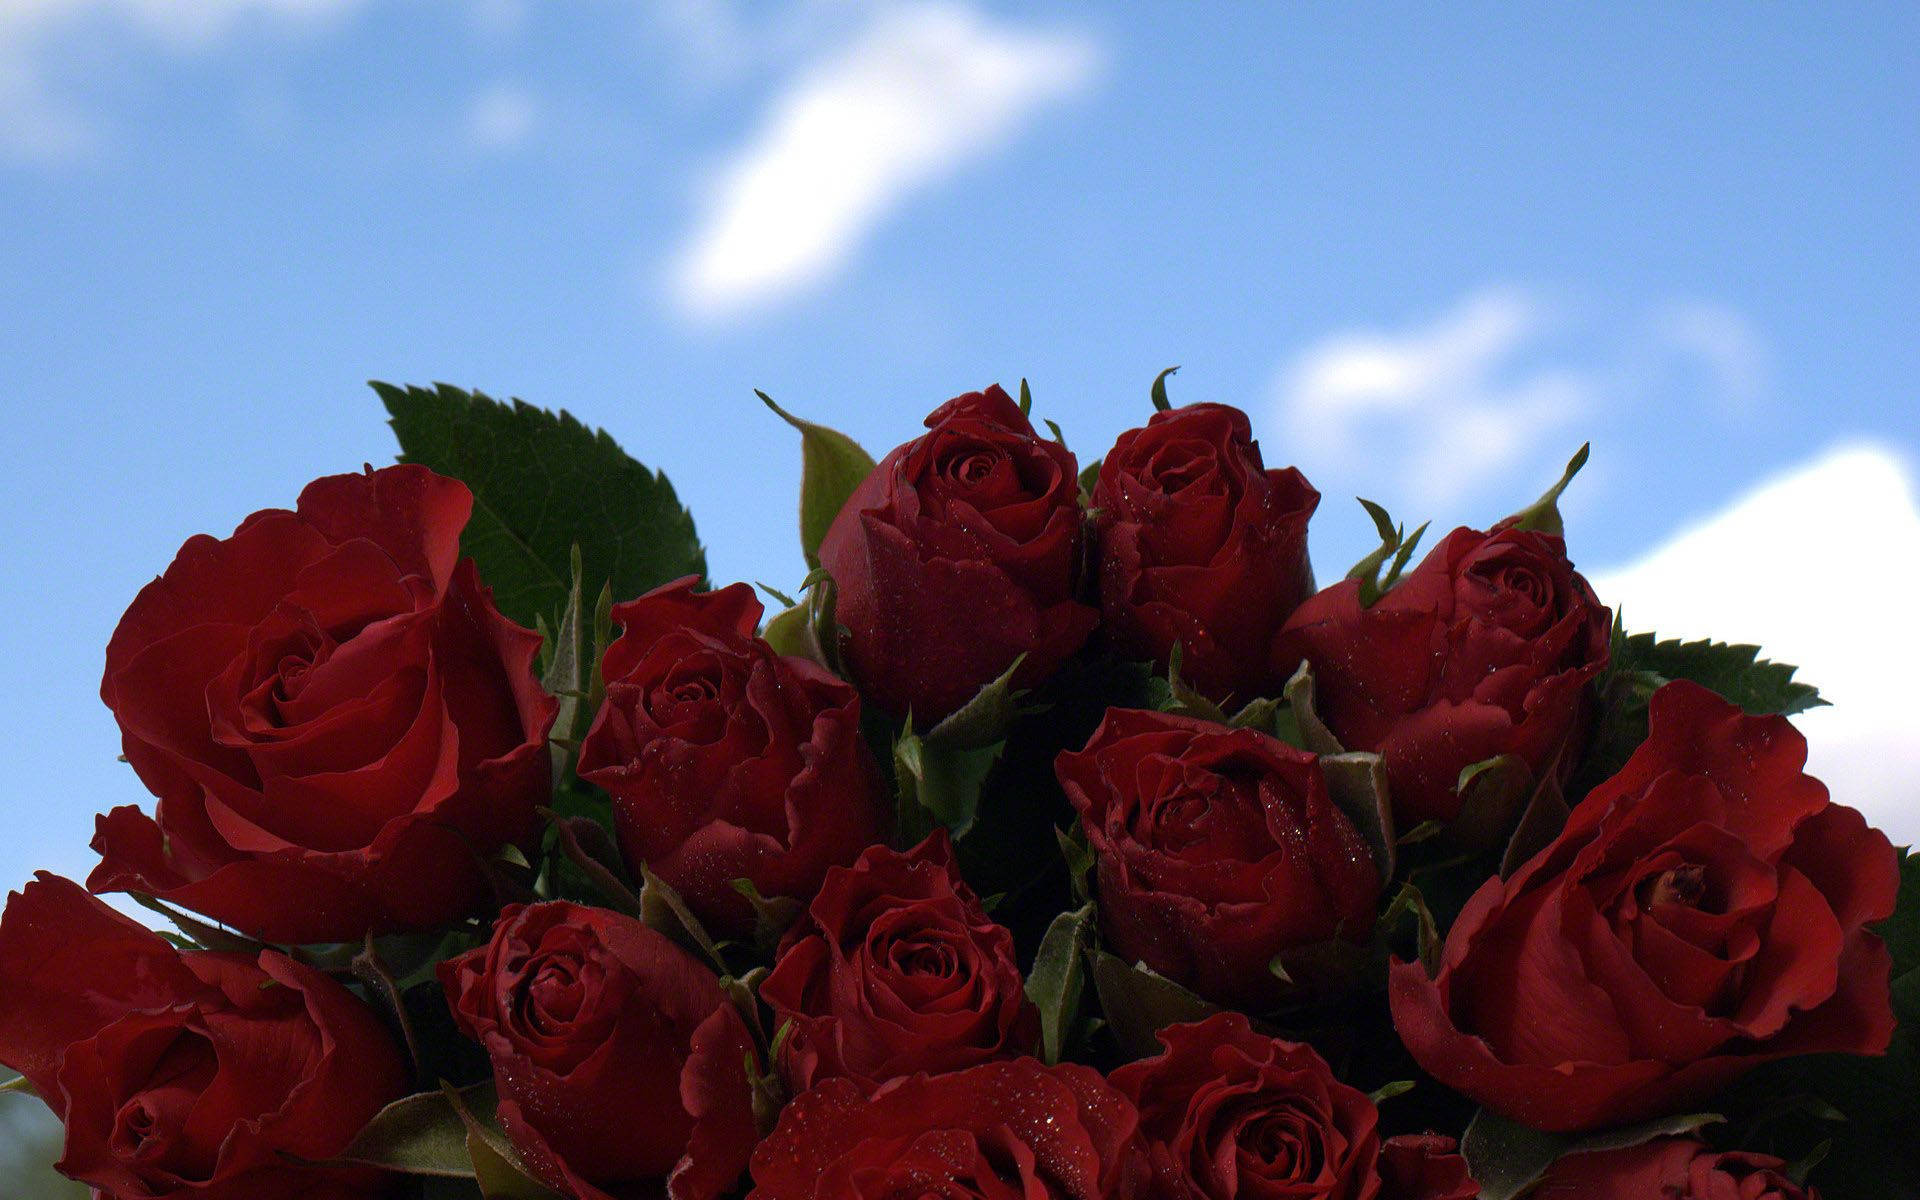 Dewy Red Roses Against Blue Sky